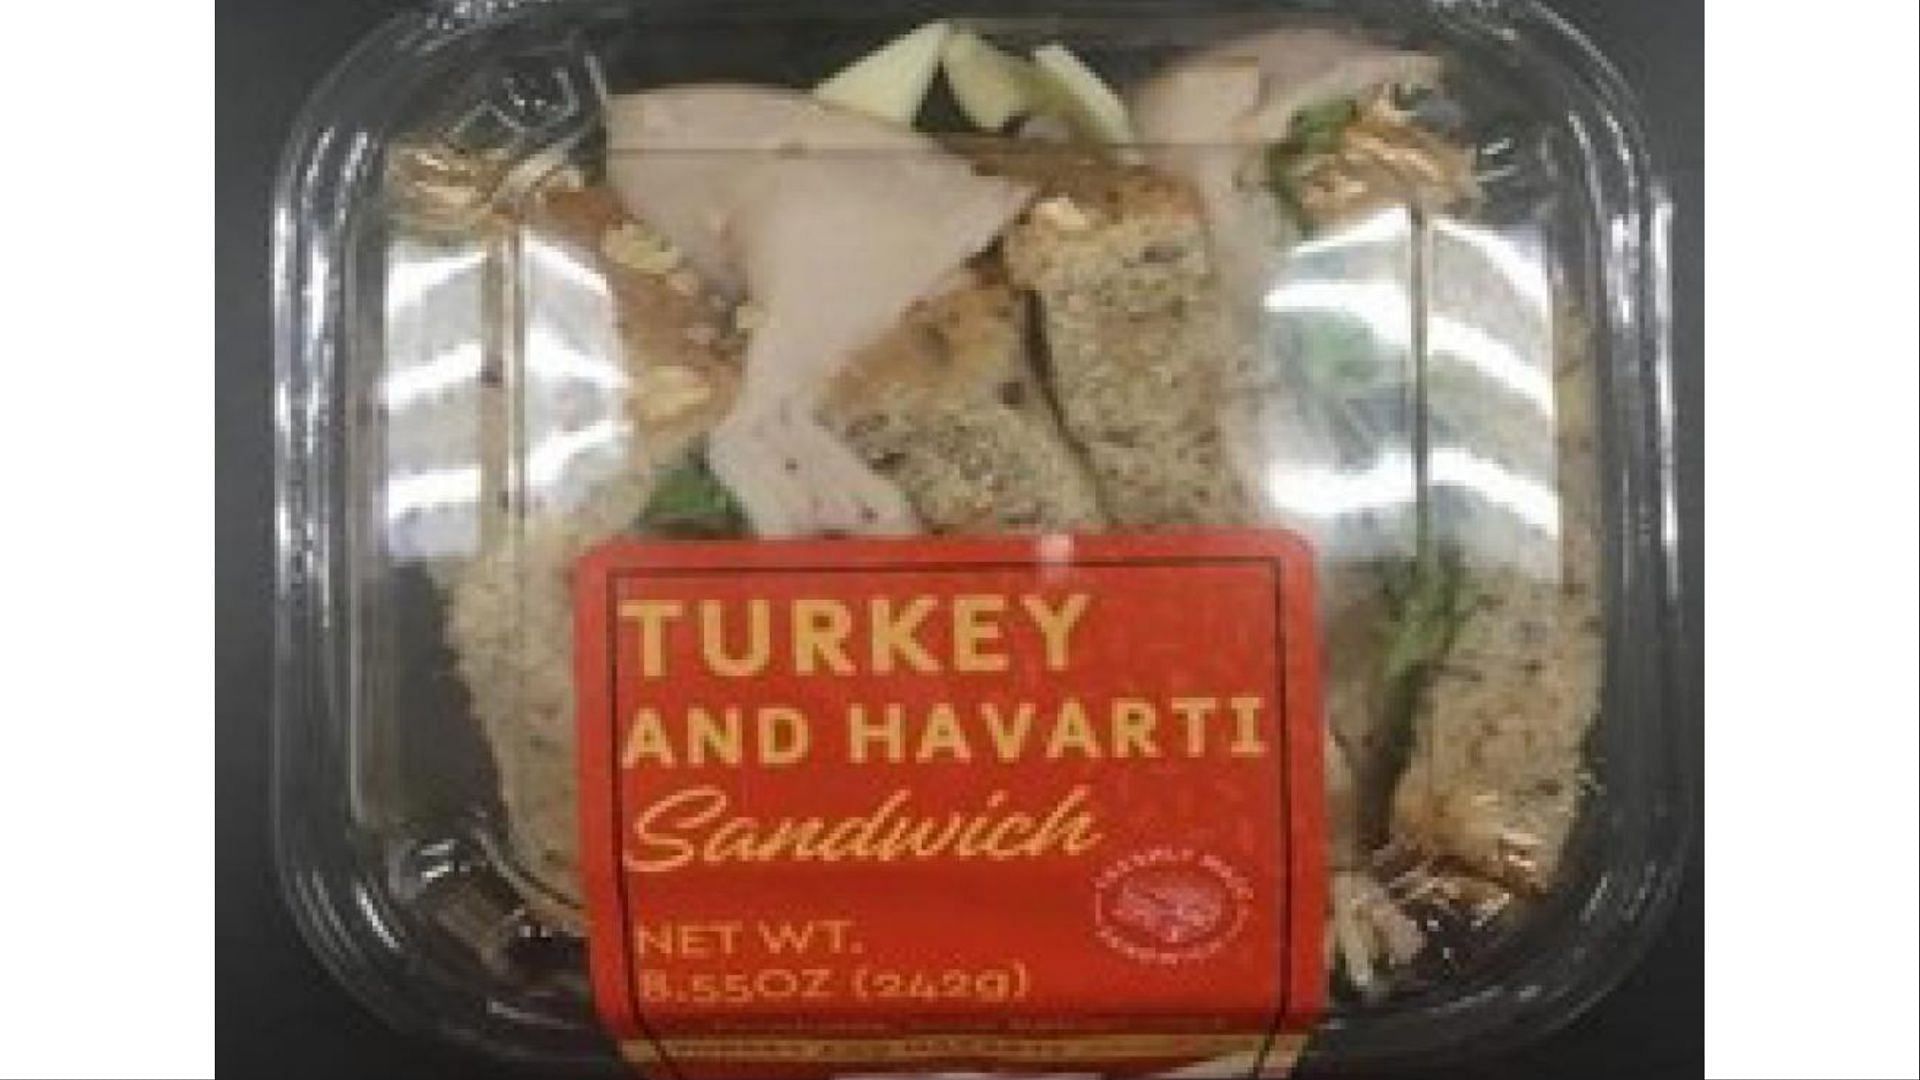 The recalled Turkey and Havarti sandwiches contain undeclared sesame allergens (Image via FDA)